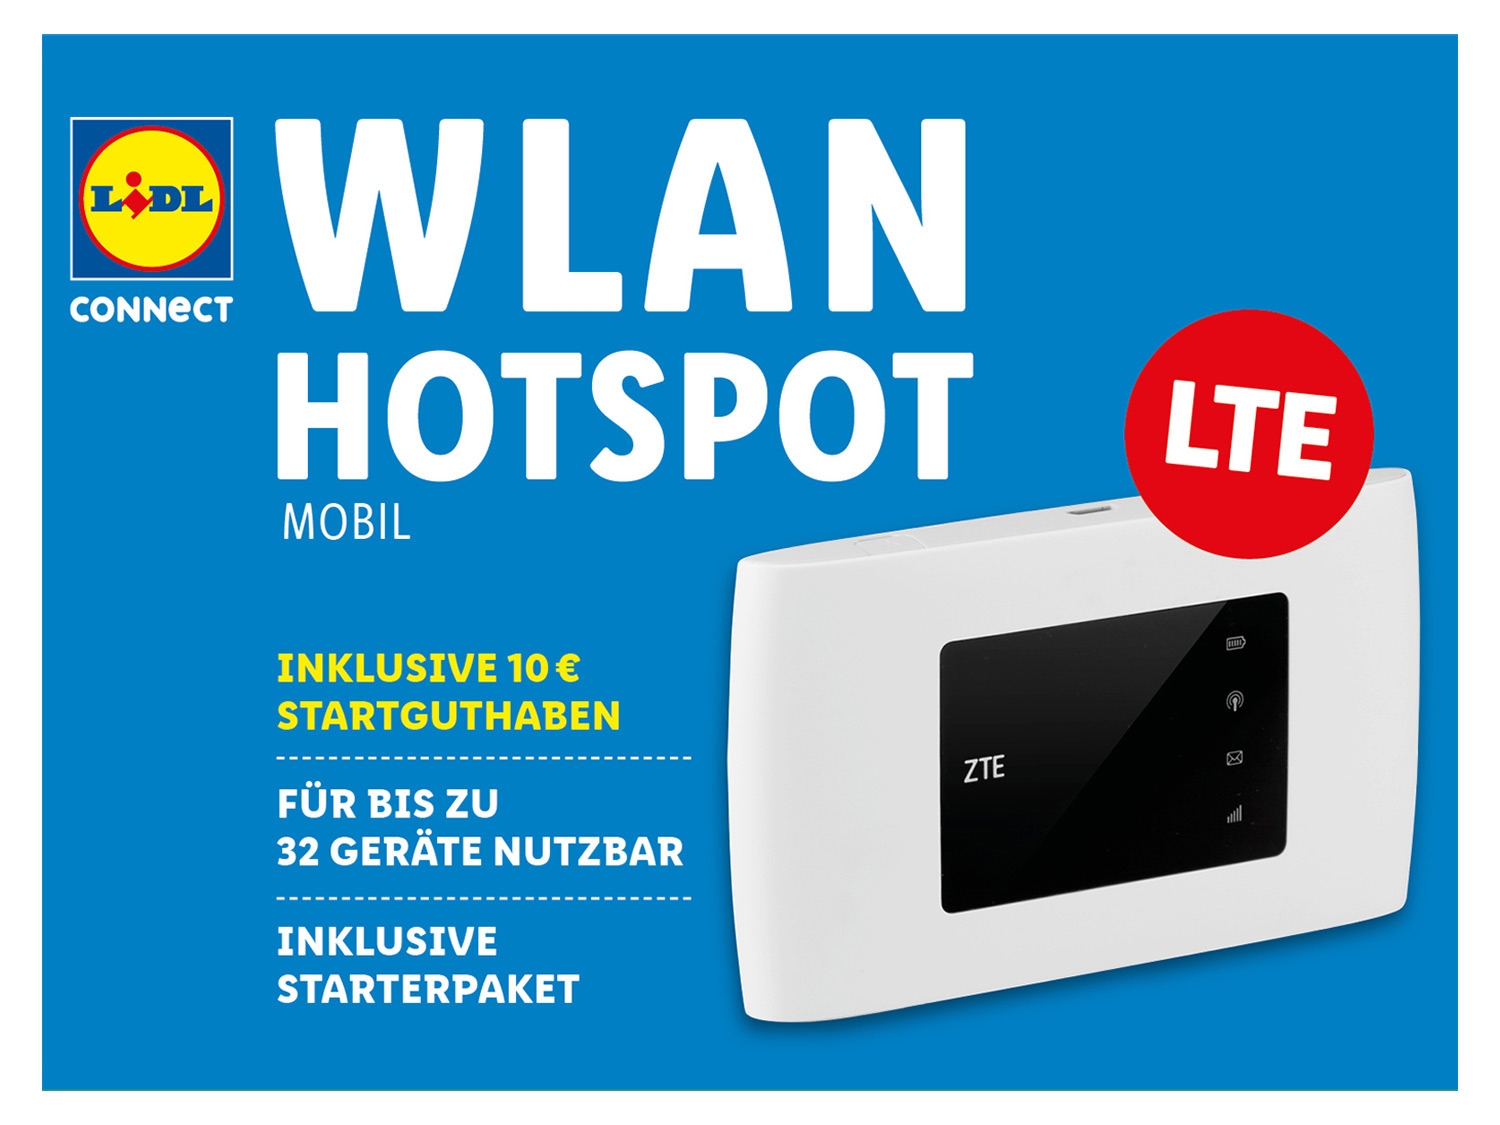 WLAN-Hotspot Lidl Connect online kaufen